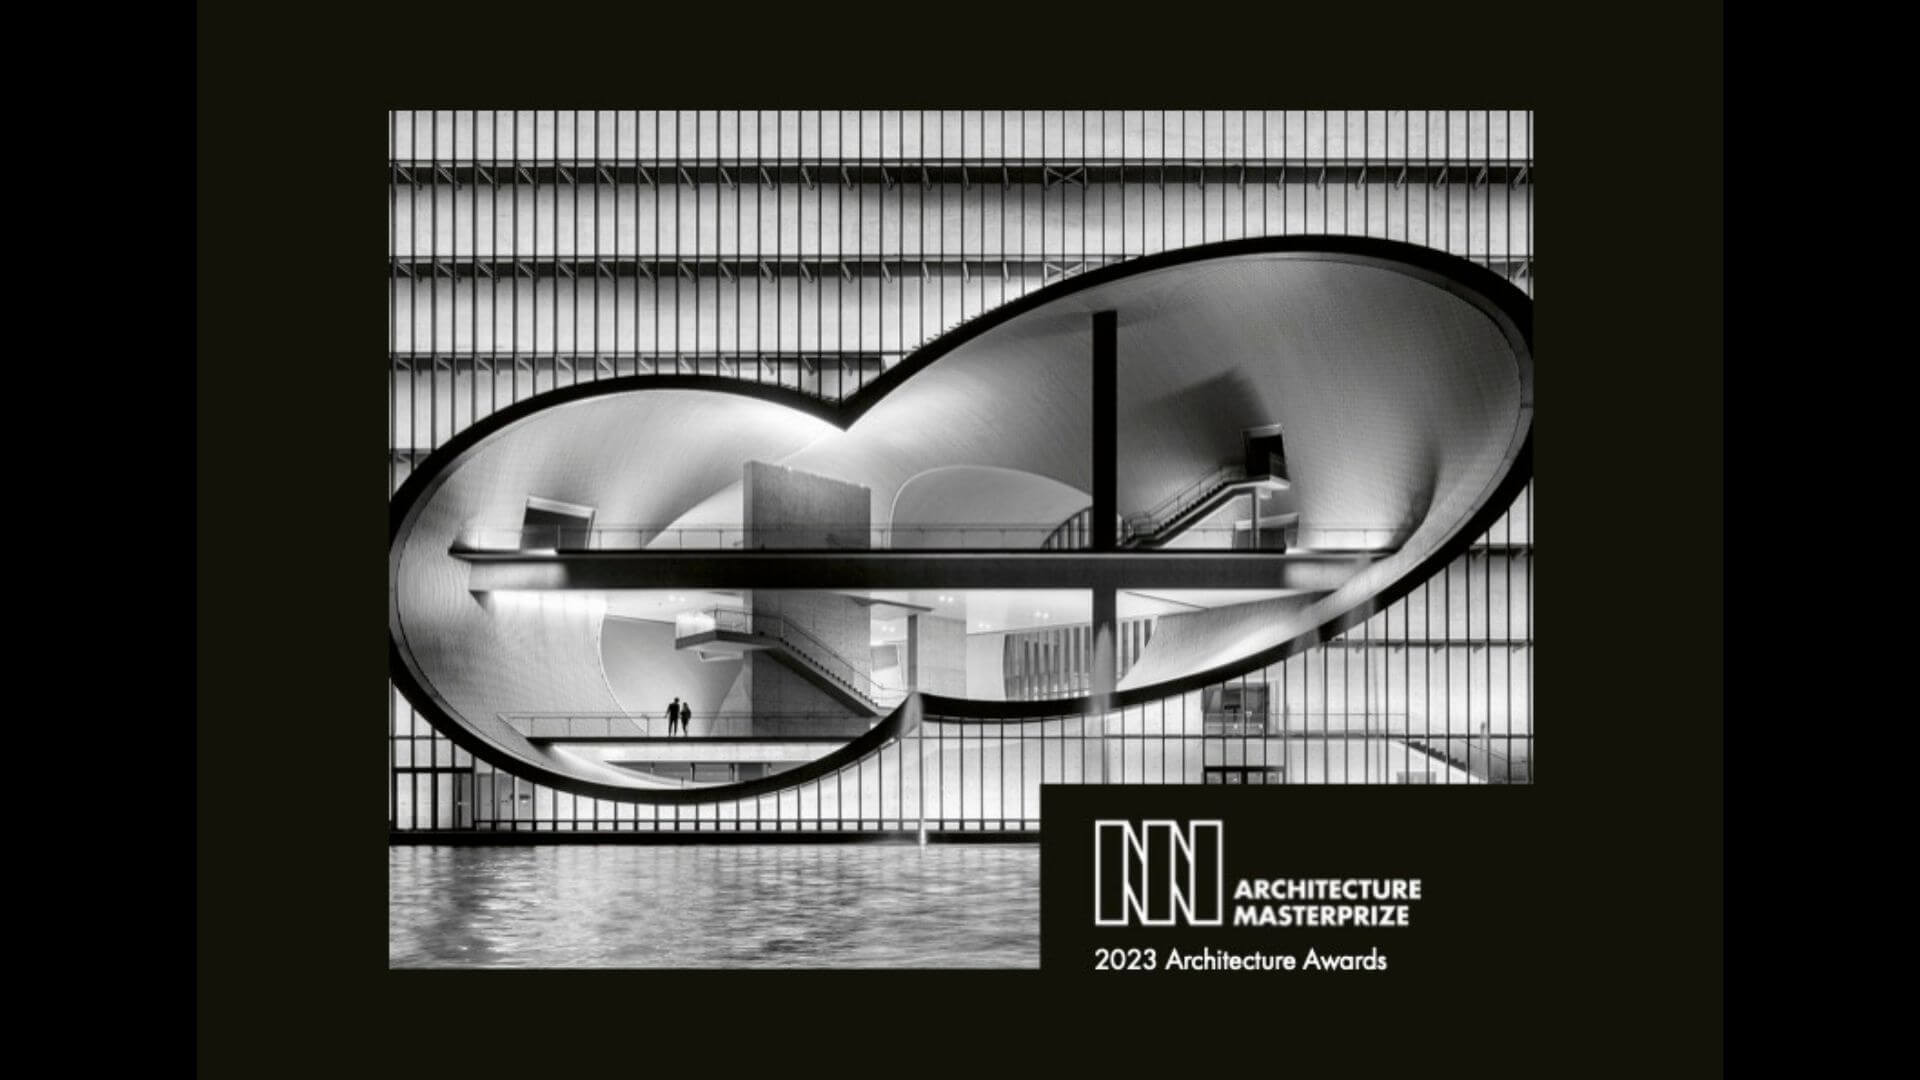 Architecture Masterprize 2023 Architeture Awards   Media Library Original 1920 1080 